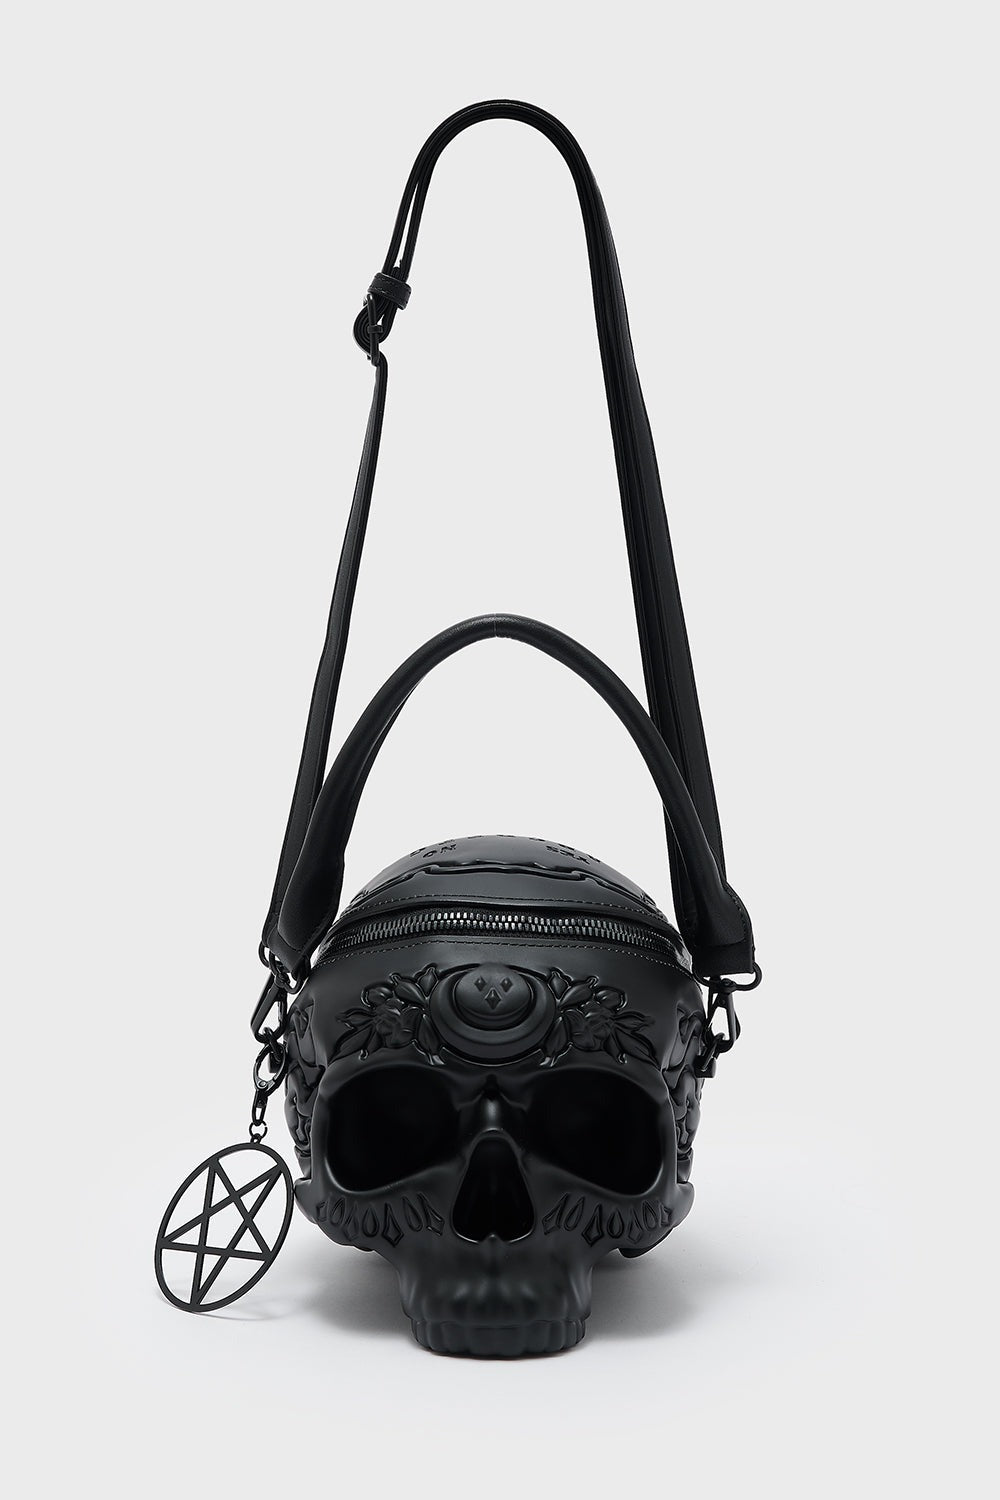 gothic black skull shaped handbag